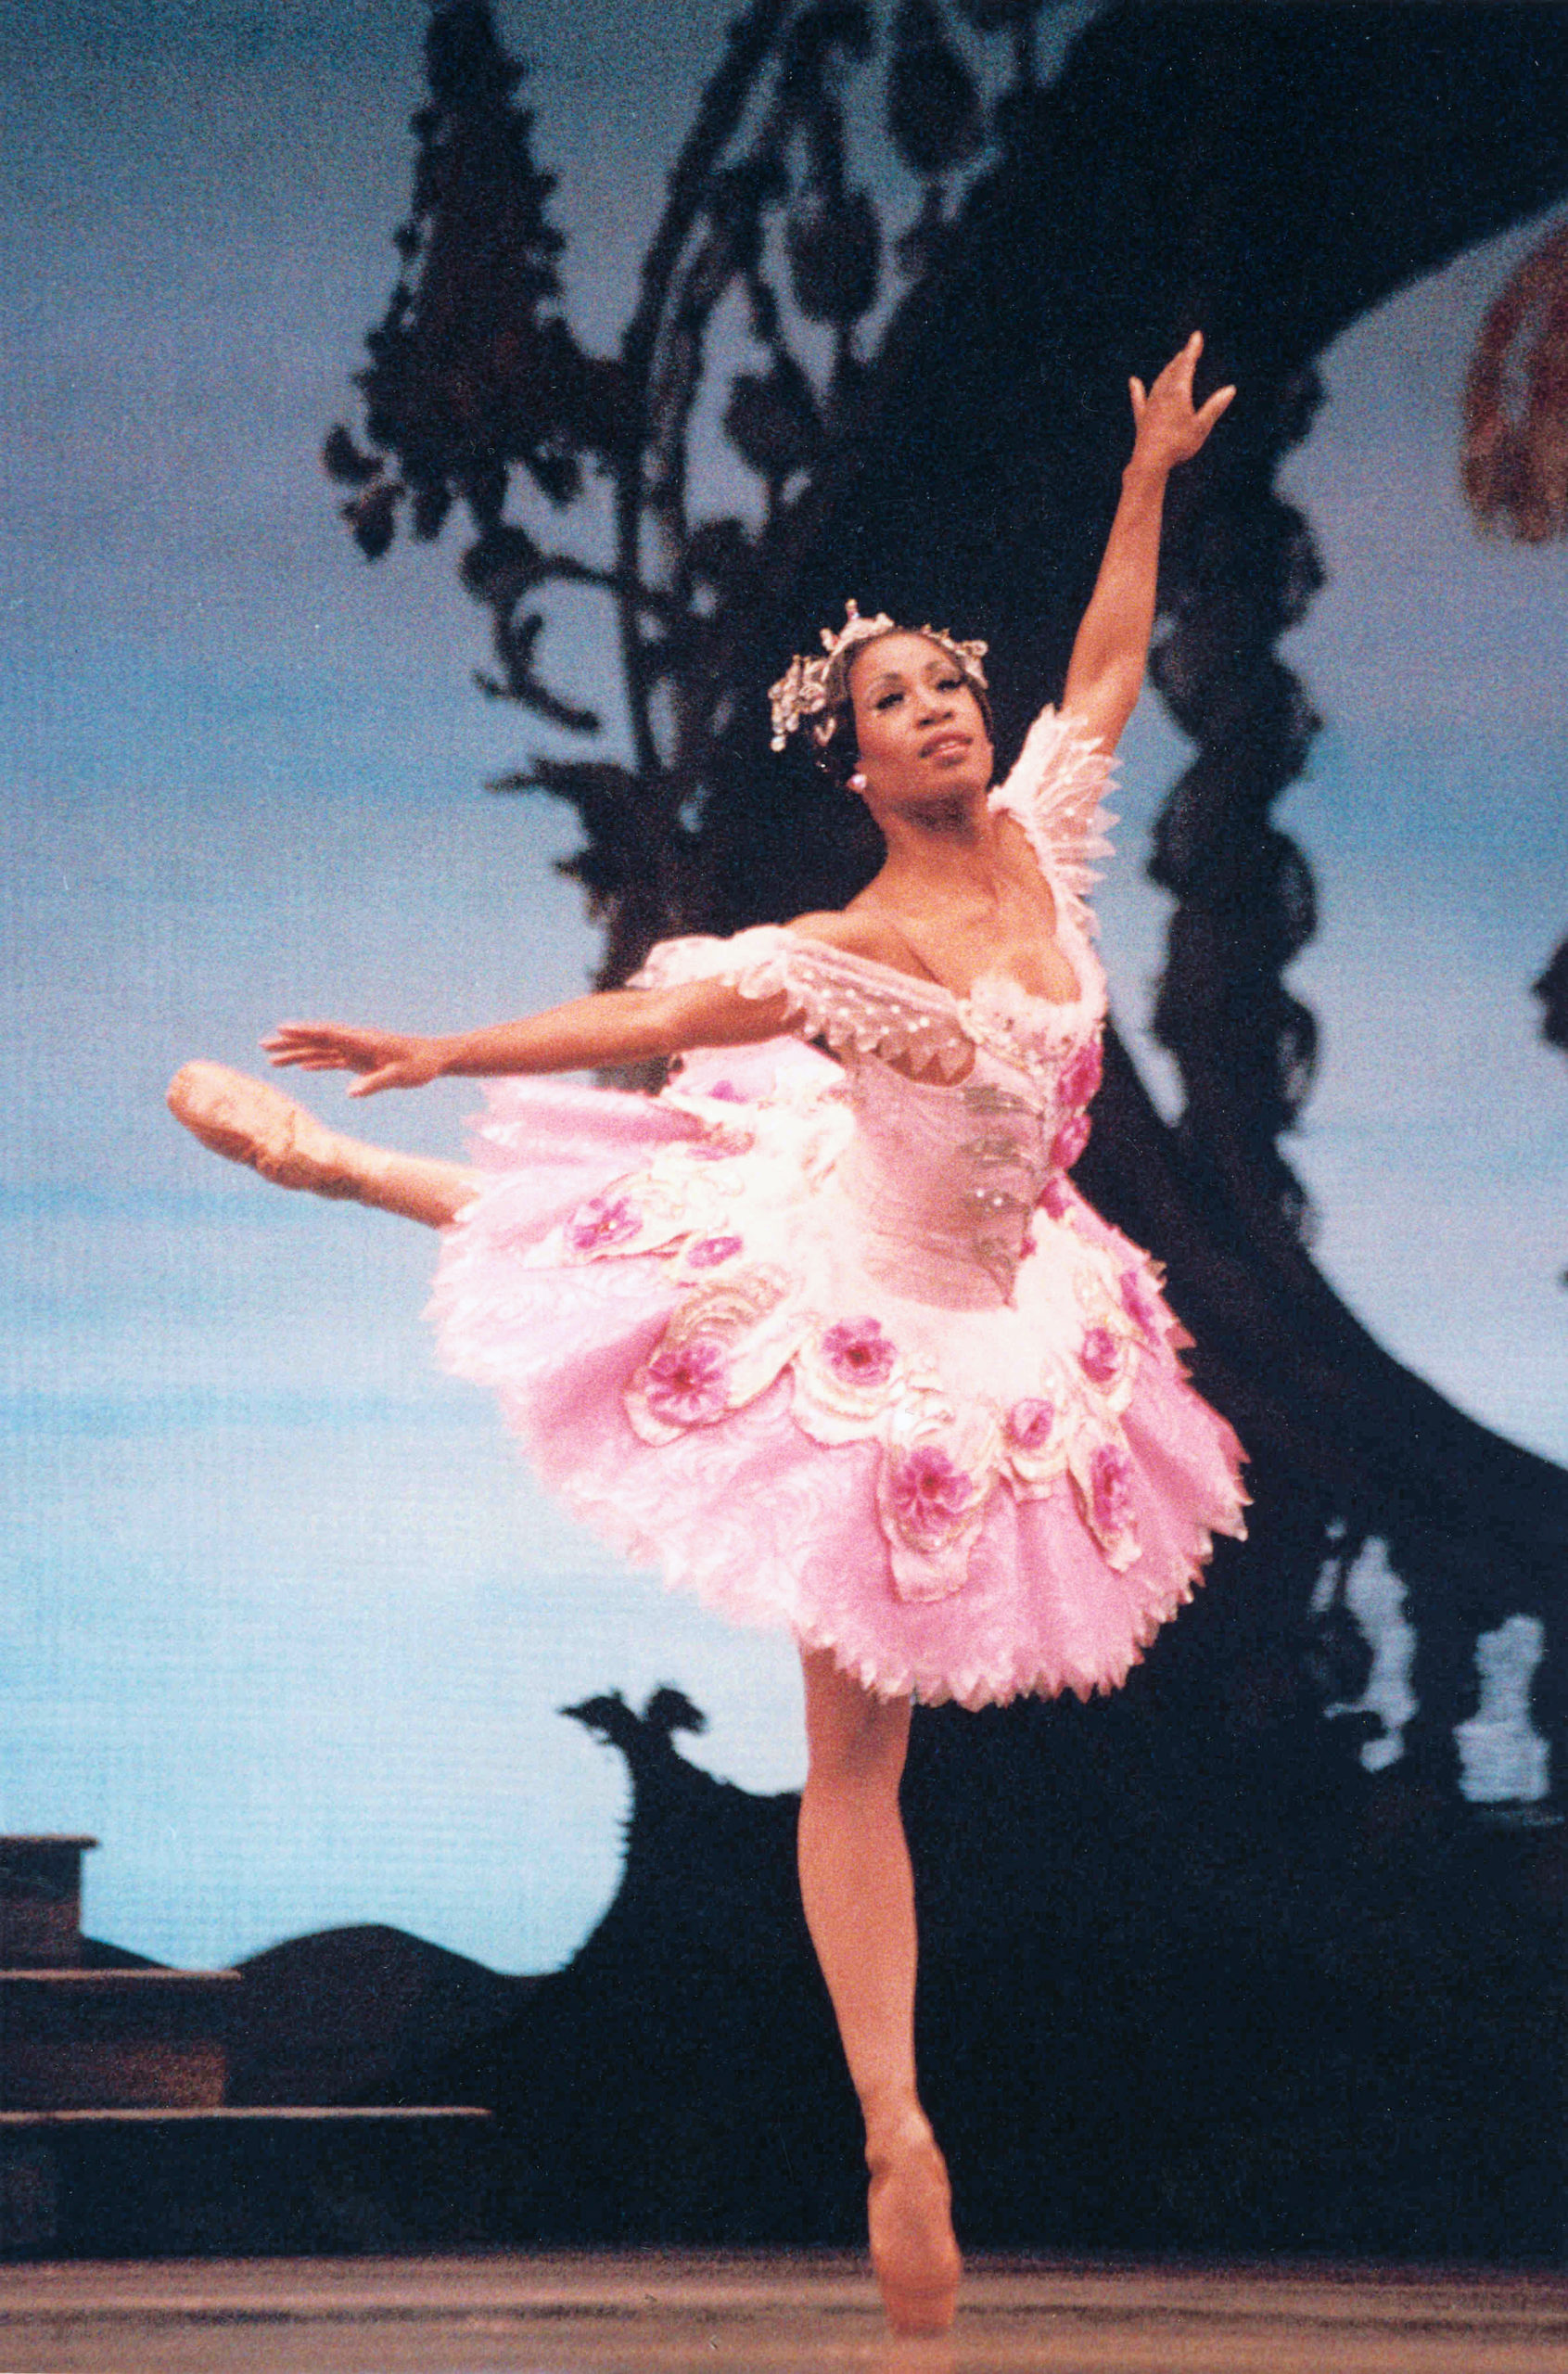 dancer wearing pink tutu performing attitude derriere on stage